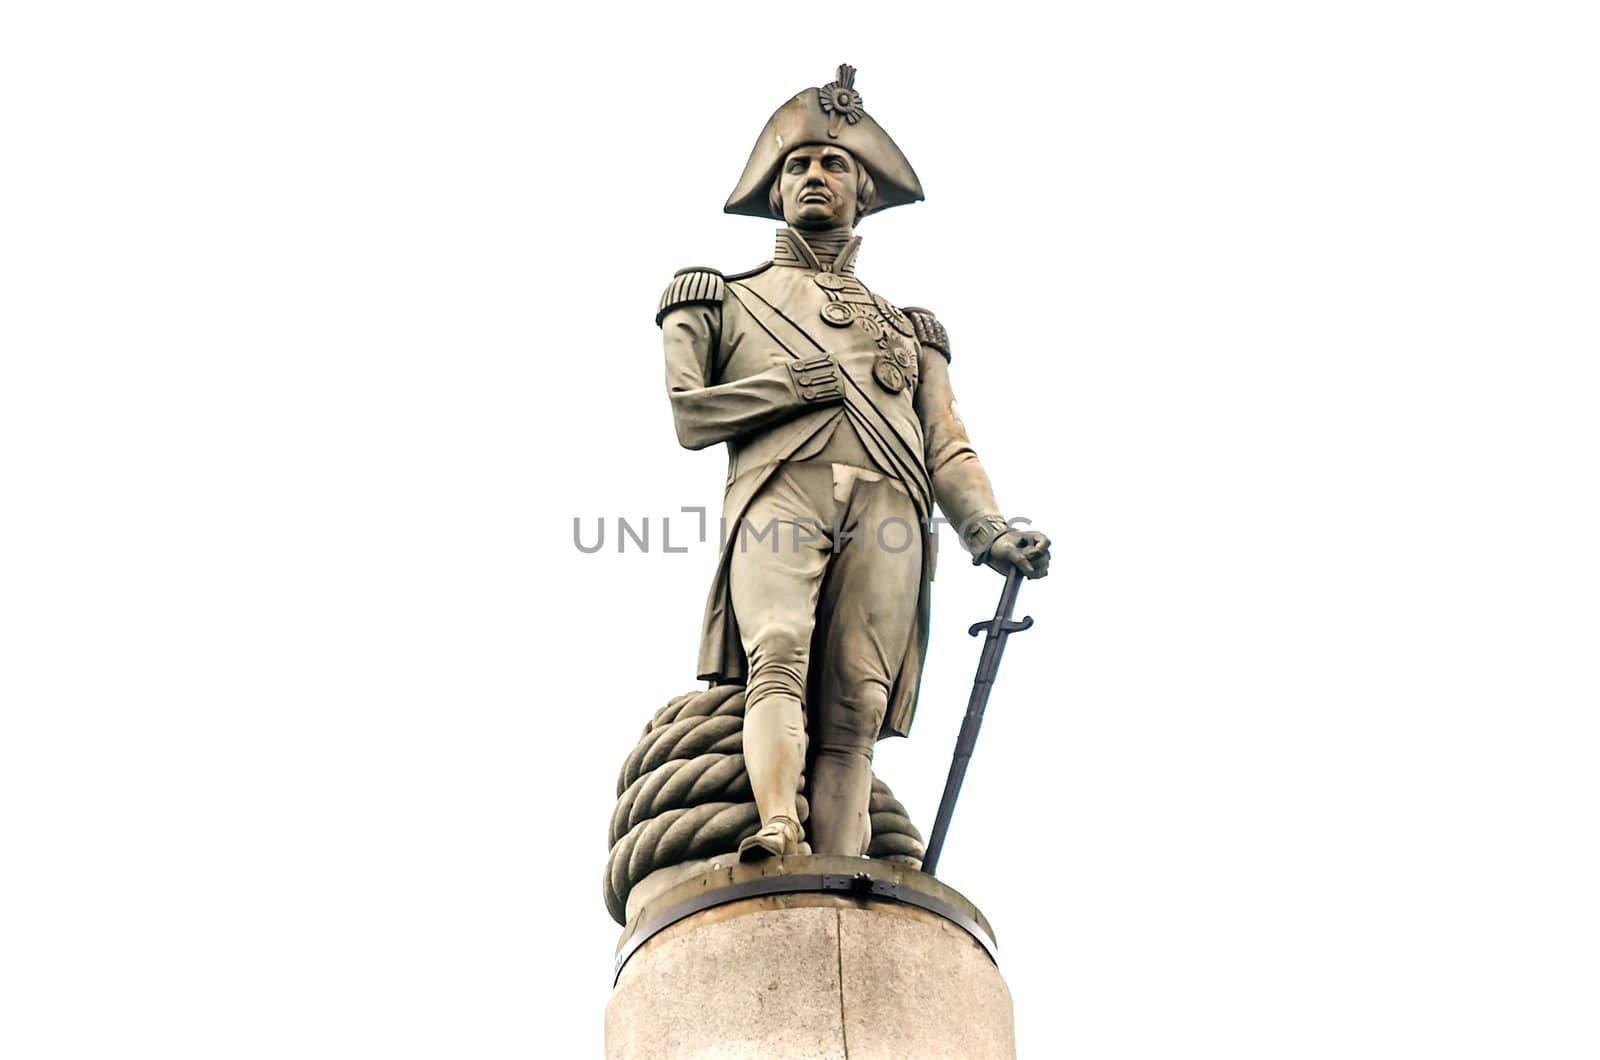 Nelson Statue at Trafalgar Square, London, UK by marcorubino